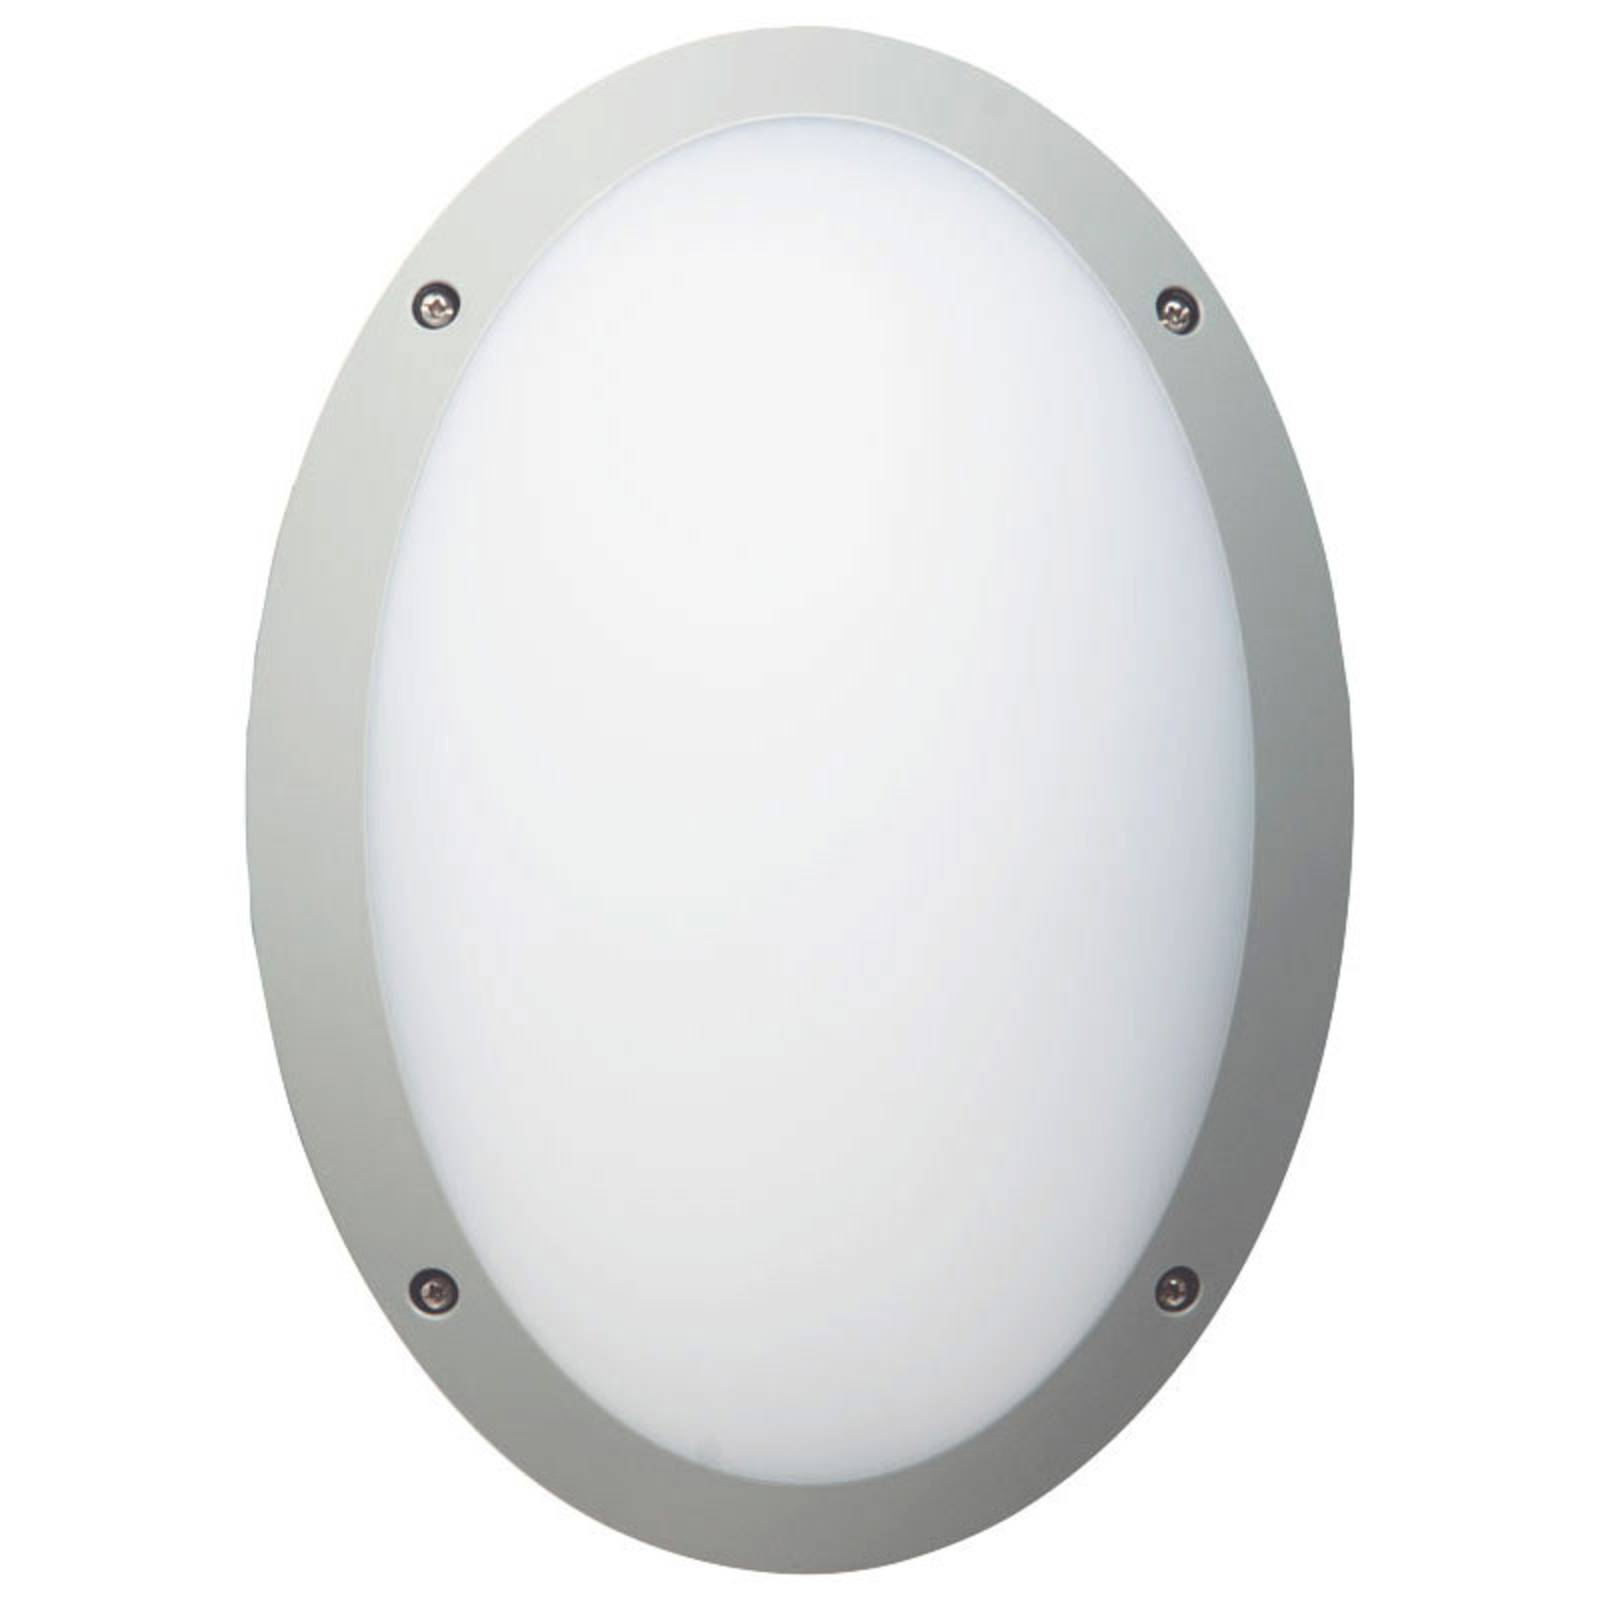 LED-wandlamp Fonda in ovale vorm met IP66